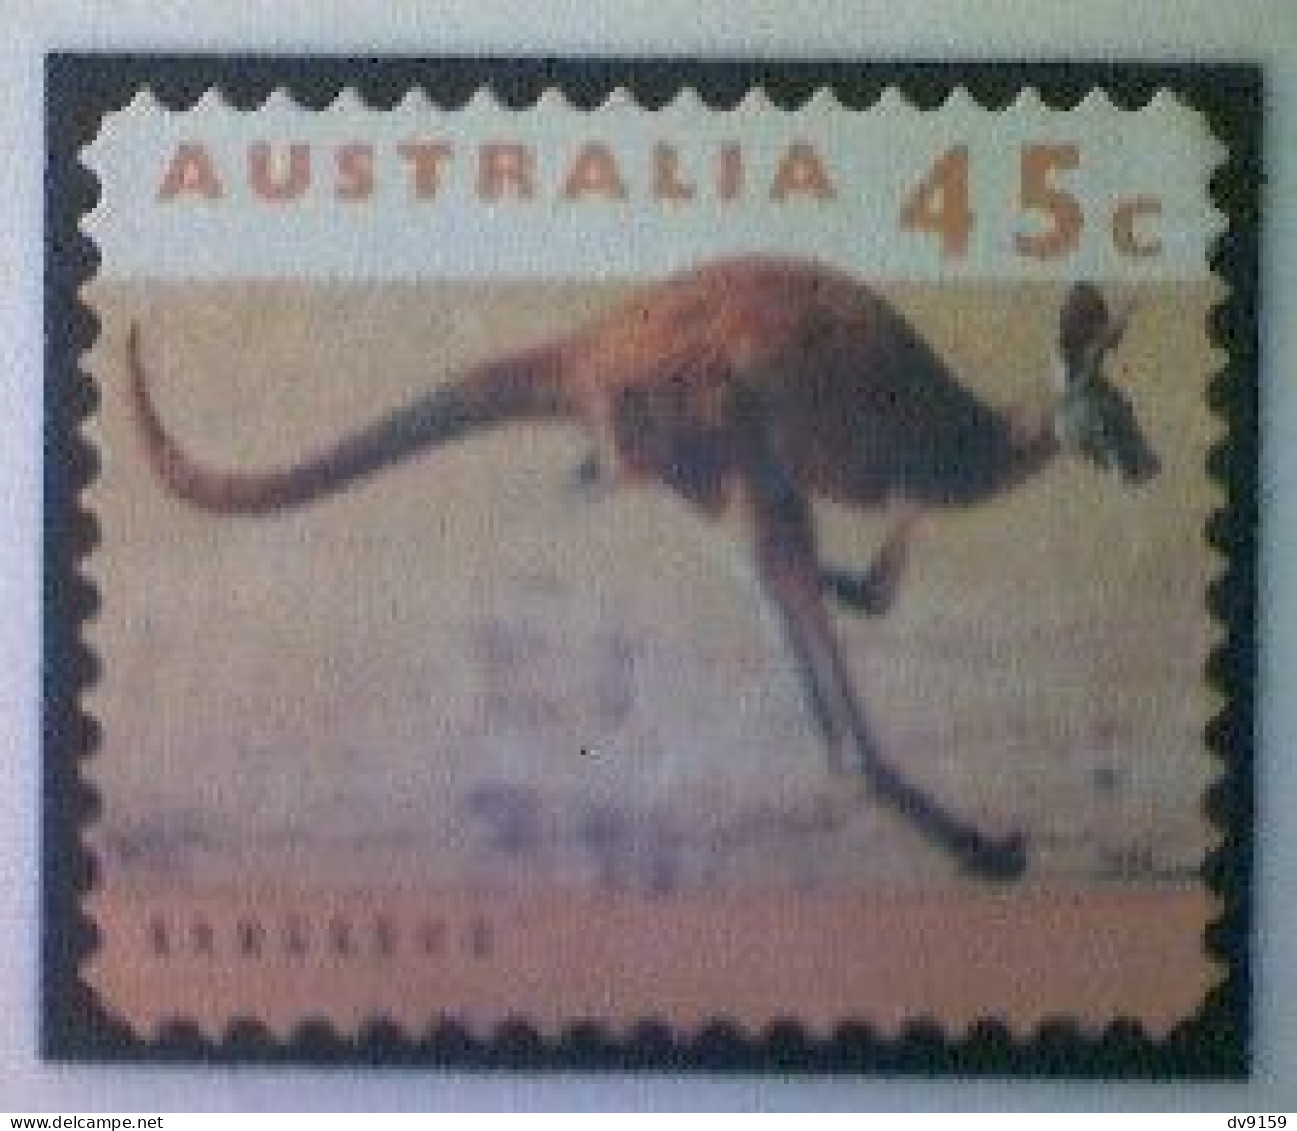 Australia, Scott #1288, Used (o), 1994, Wildlife Series, Kangaroo, 45¢, Orange And Multicolored - Gebruikt